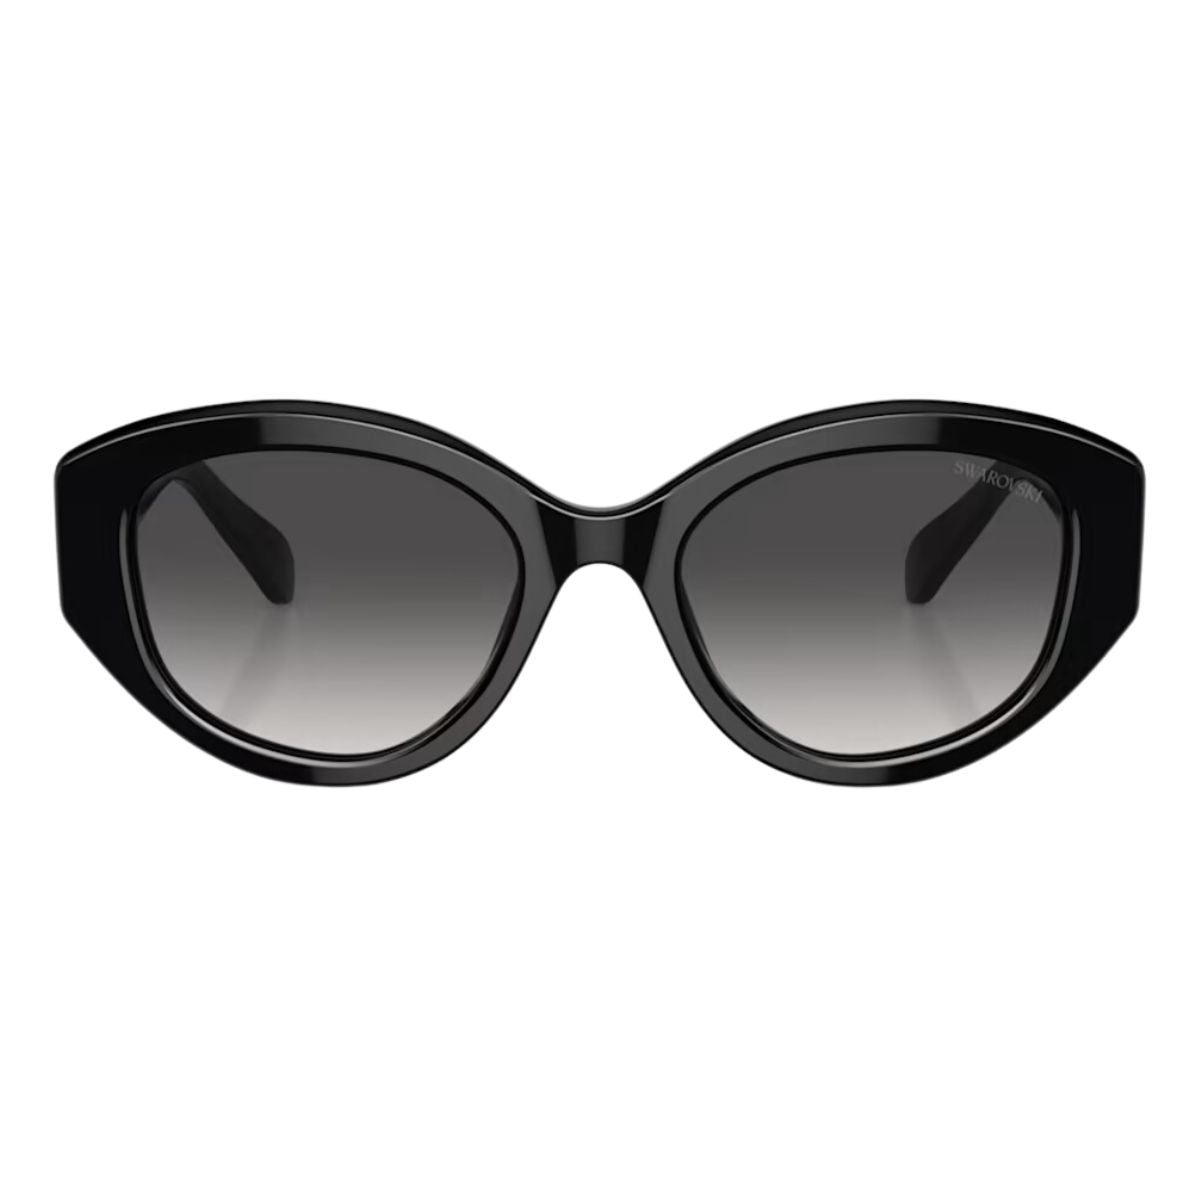 "Shop Latest Swarovski Sunglasses For Womens At Optorium Online Store | Discounted Swarovski Eyewear" 